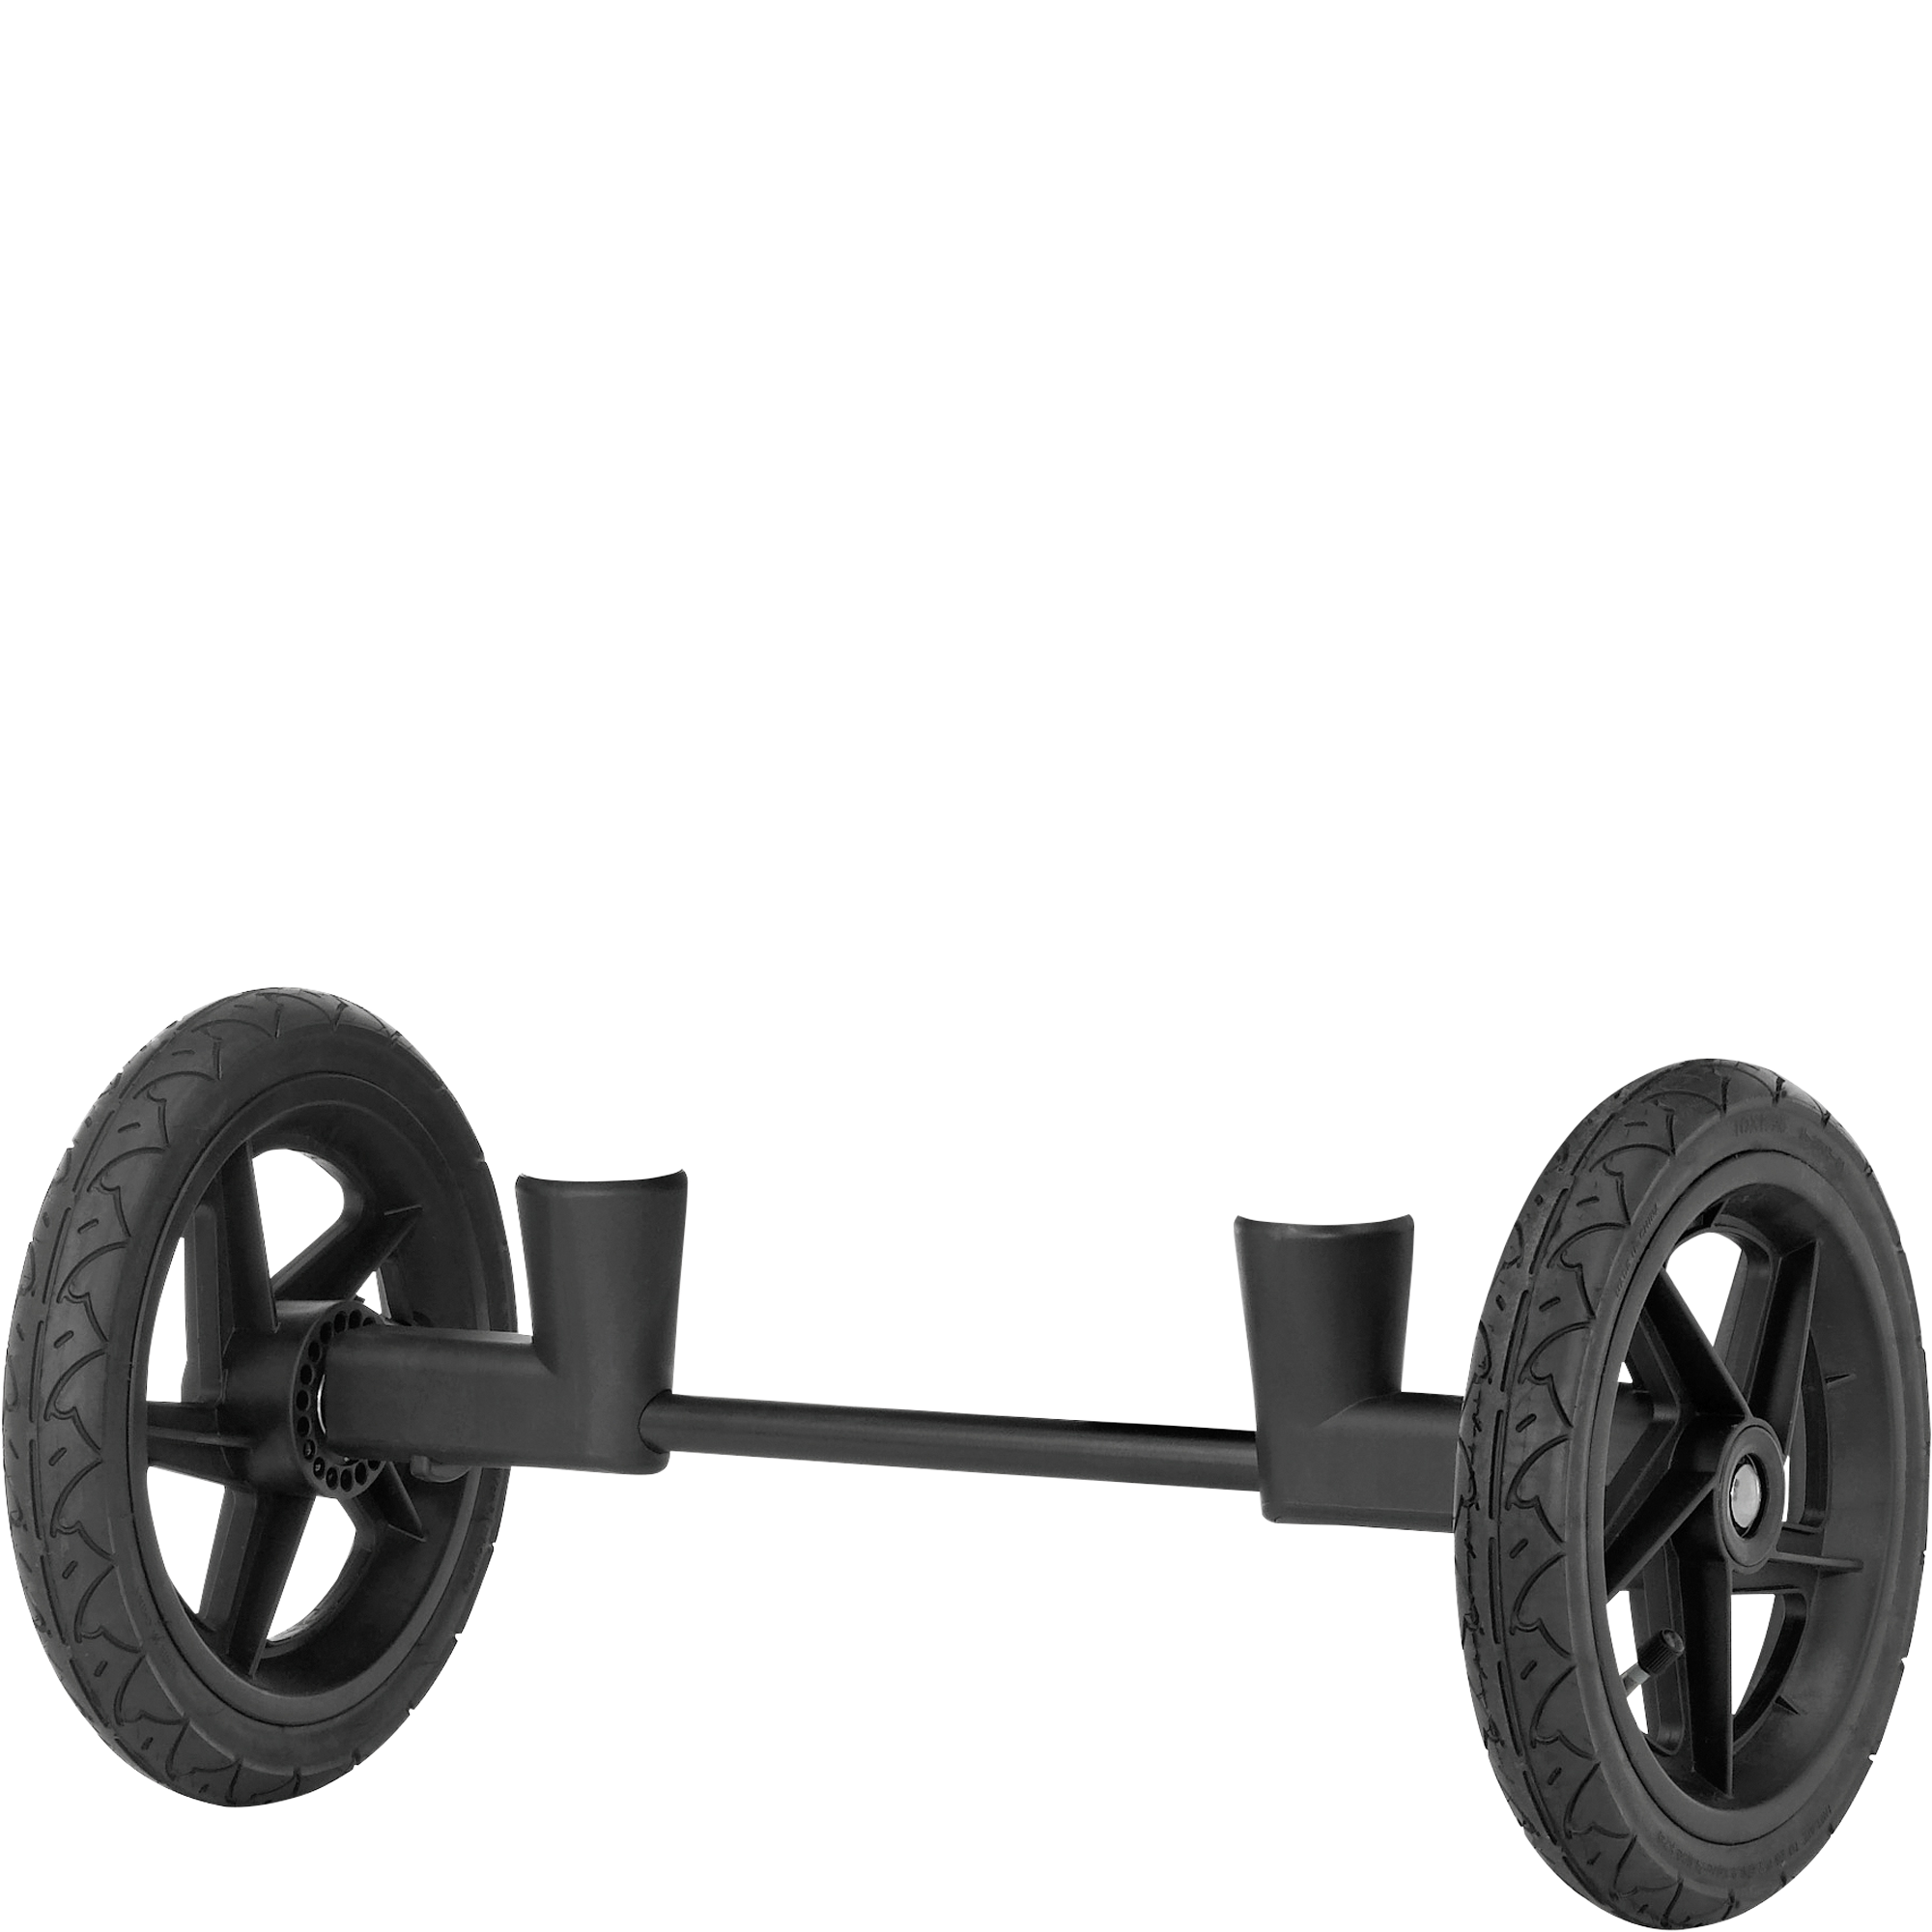 britax wheels